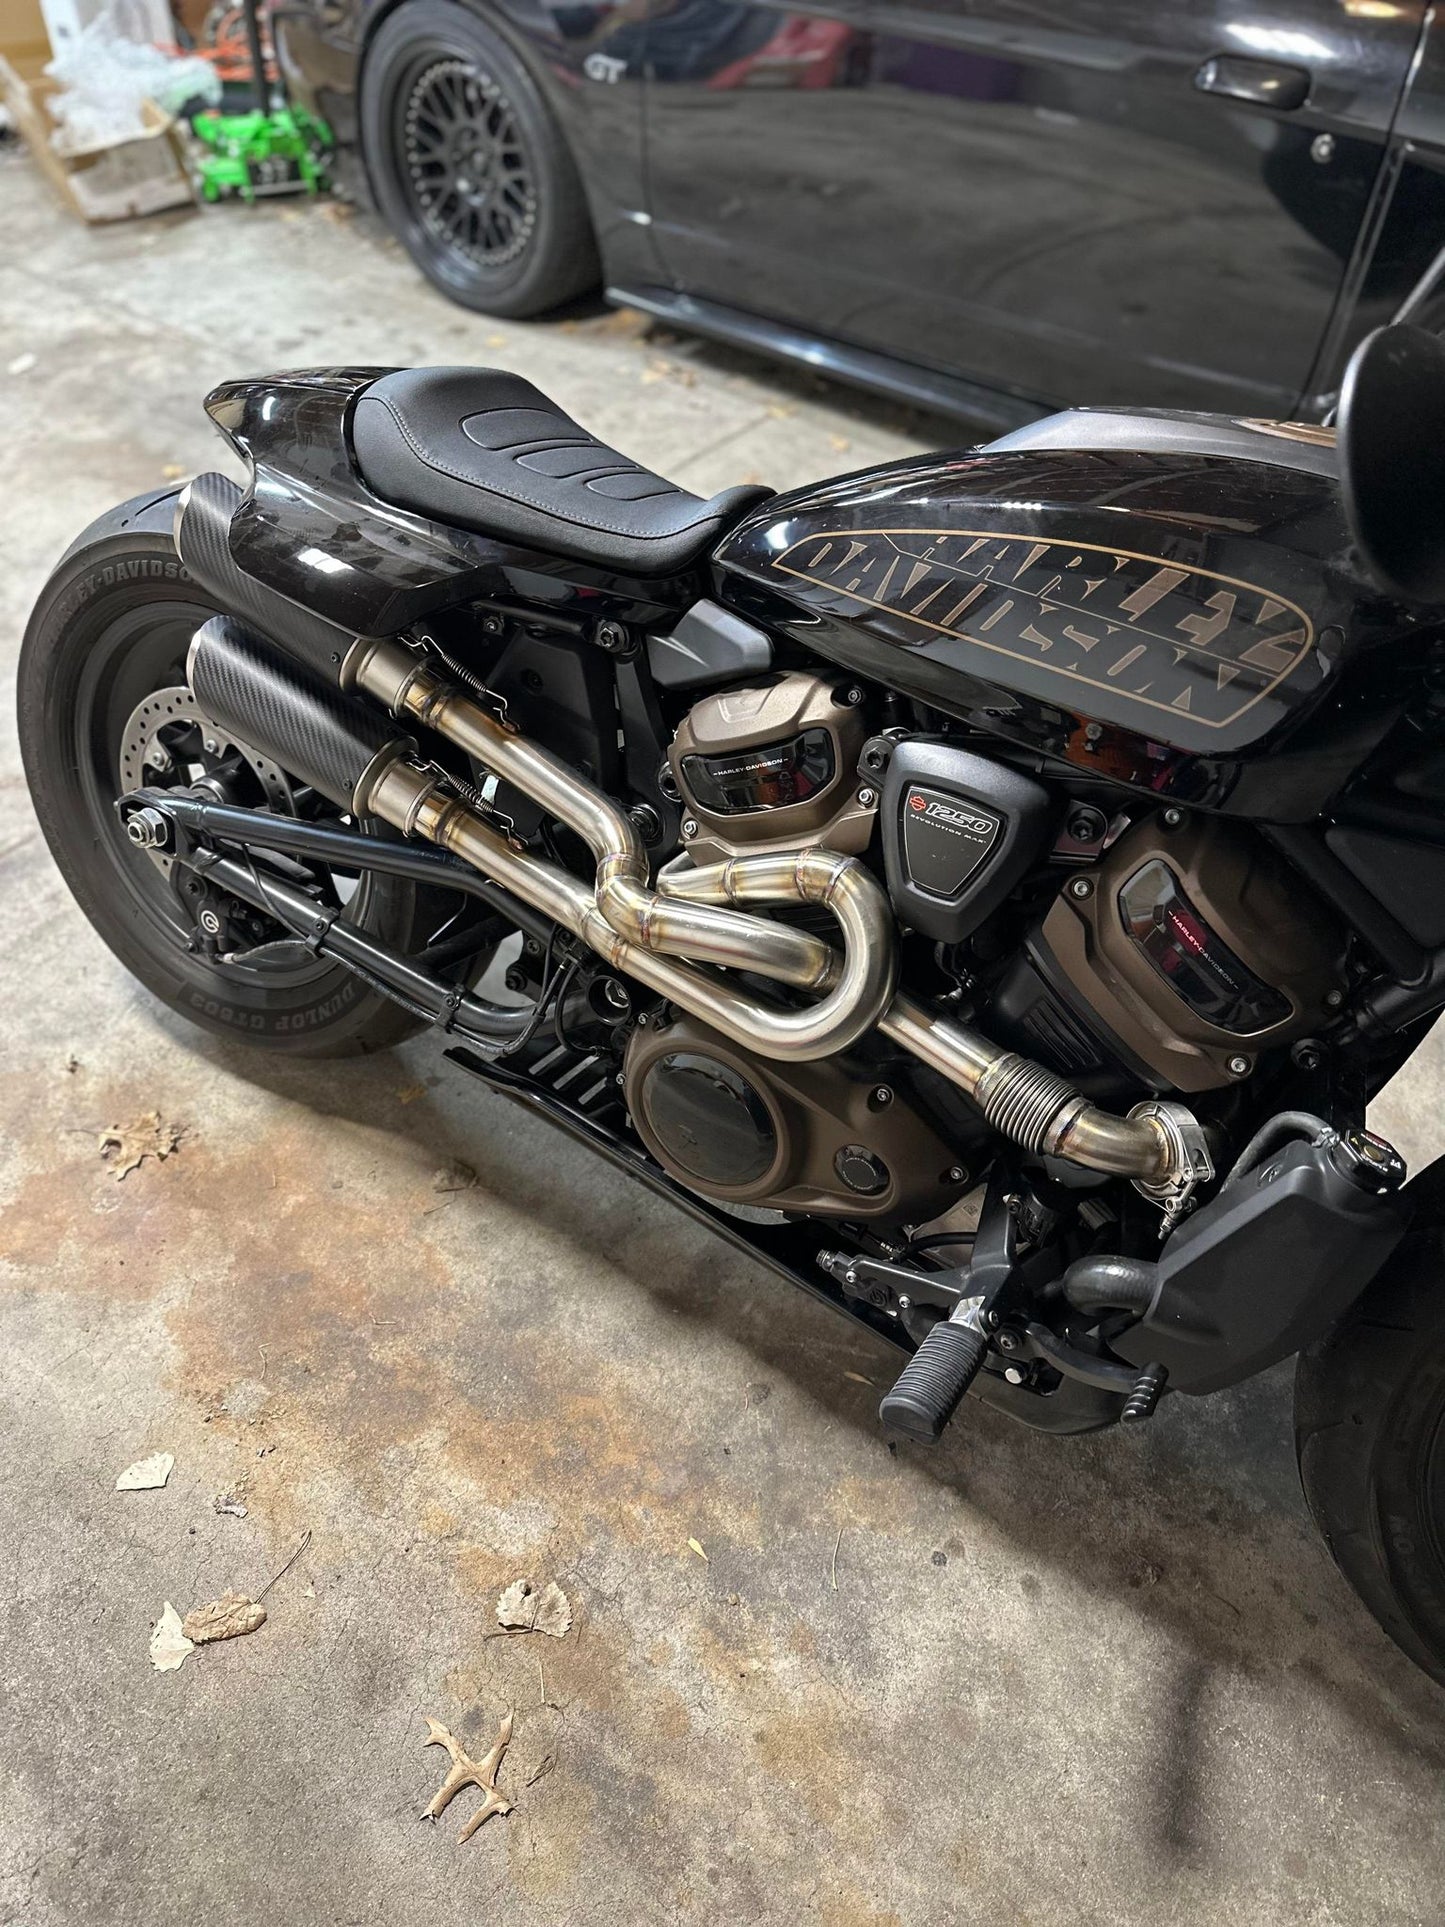 Harley Sportster S Sidewinder Exhaust